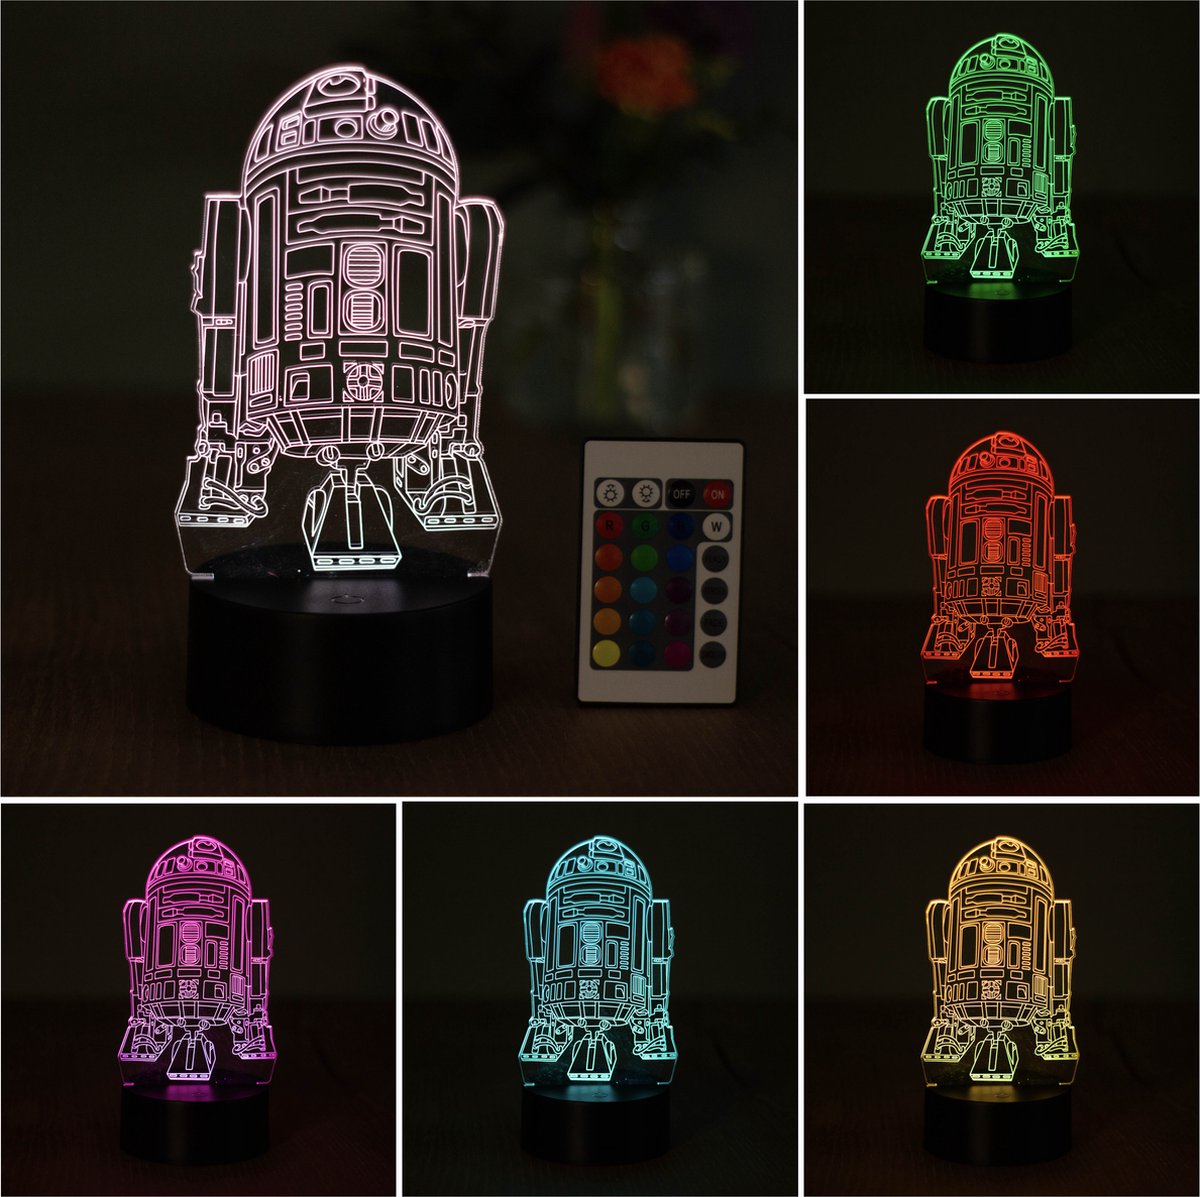 Klarigo®️ Nachtlamp – 3D LED Lamp Illusie – Star Wars - 16 Kleuren – Bureaulamp – R2D2 – Sfeerlamp – Nachtlampje Kinderen – Creative - Afstandsbediening